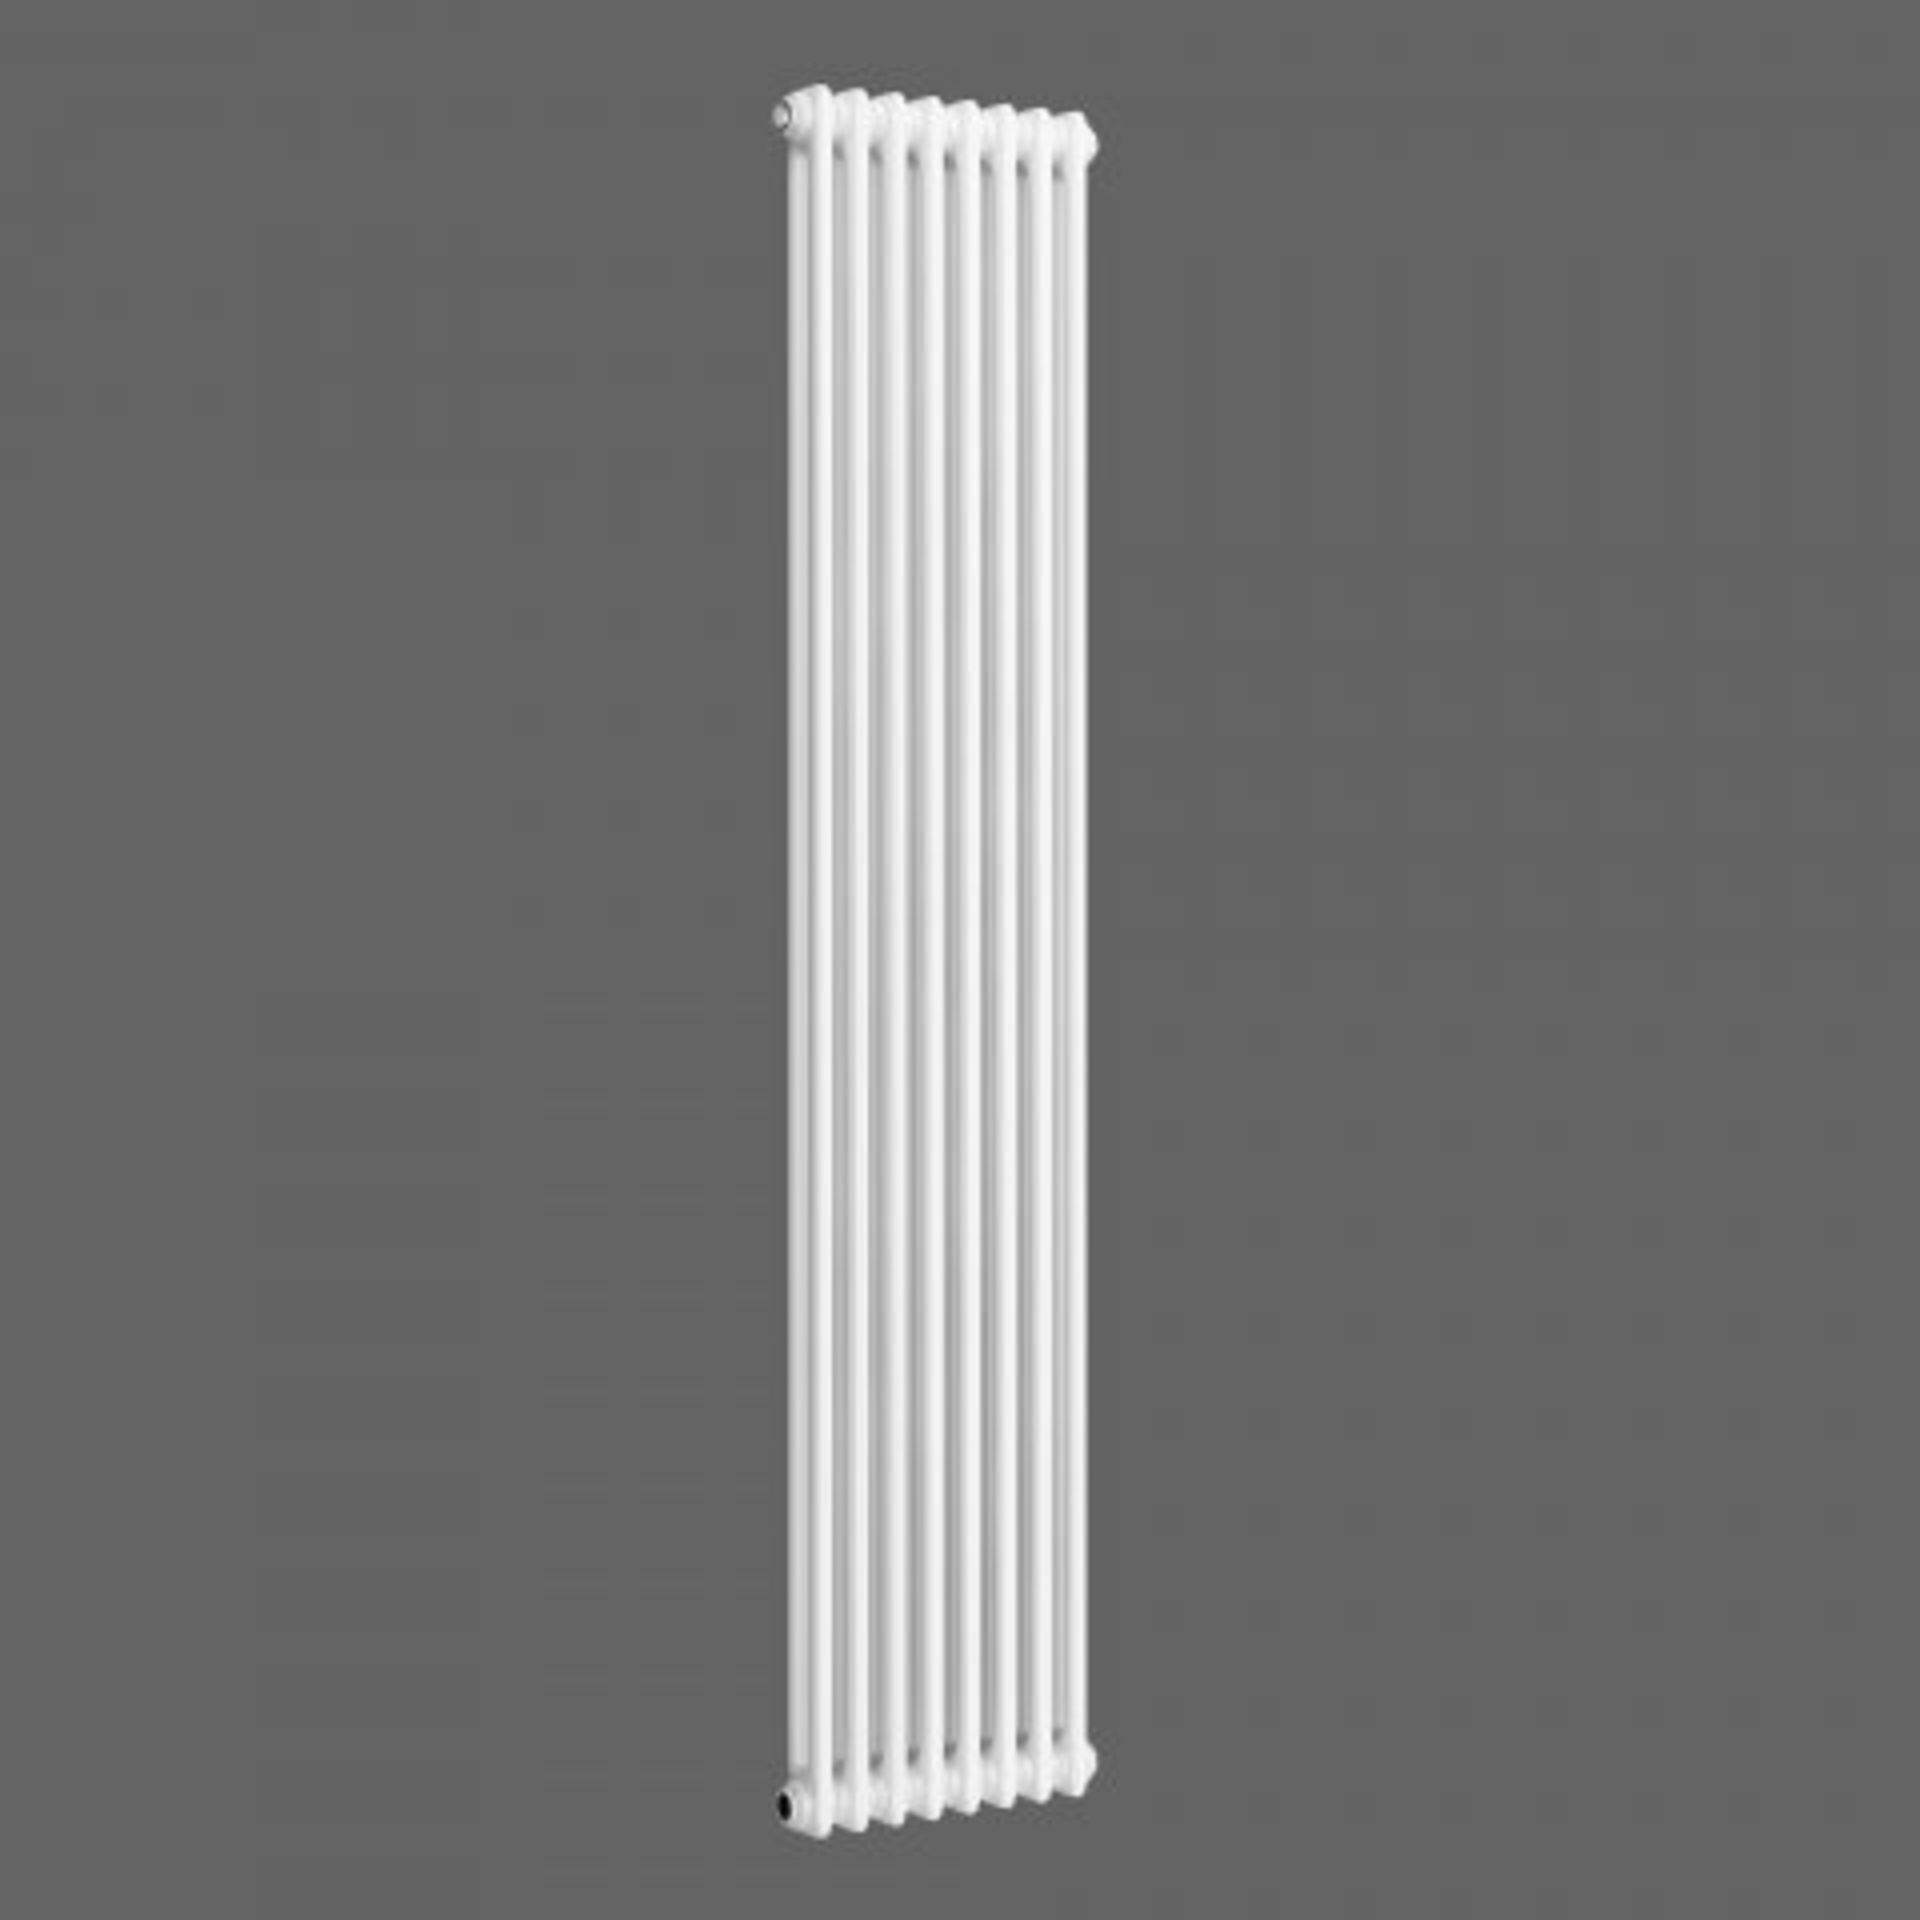 (M52) 1800x380mm White Double Panel Vertical Colosseum Radiator - Roma Premium. RRP £255.99. Classic - Image 3 of 4